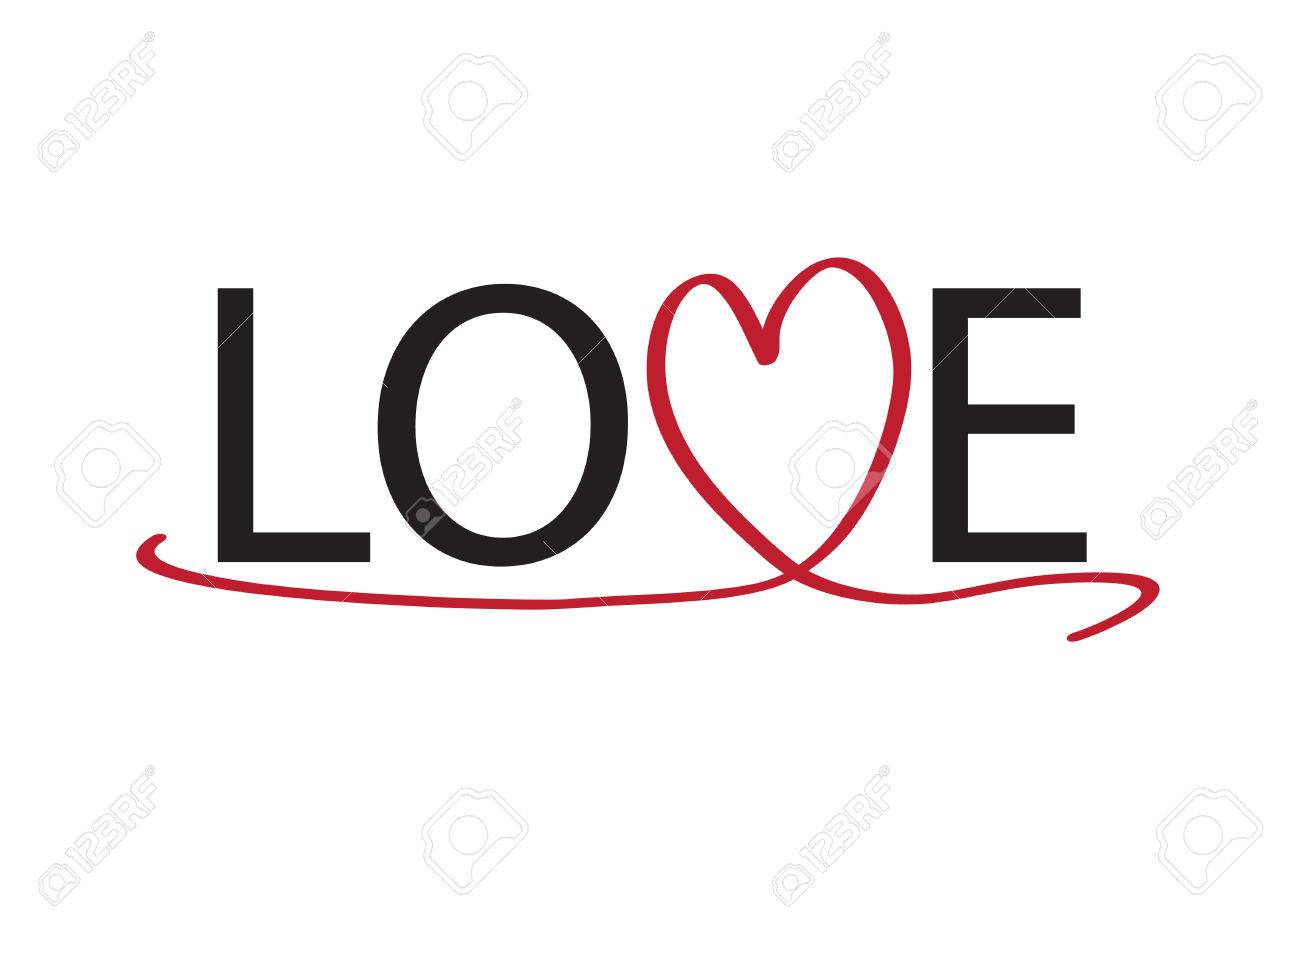 Love Text with Heart Ribbon Stok Fotoğraf - 65494736